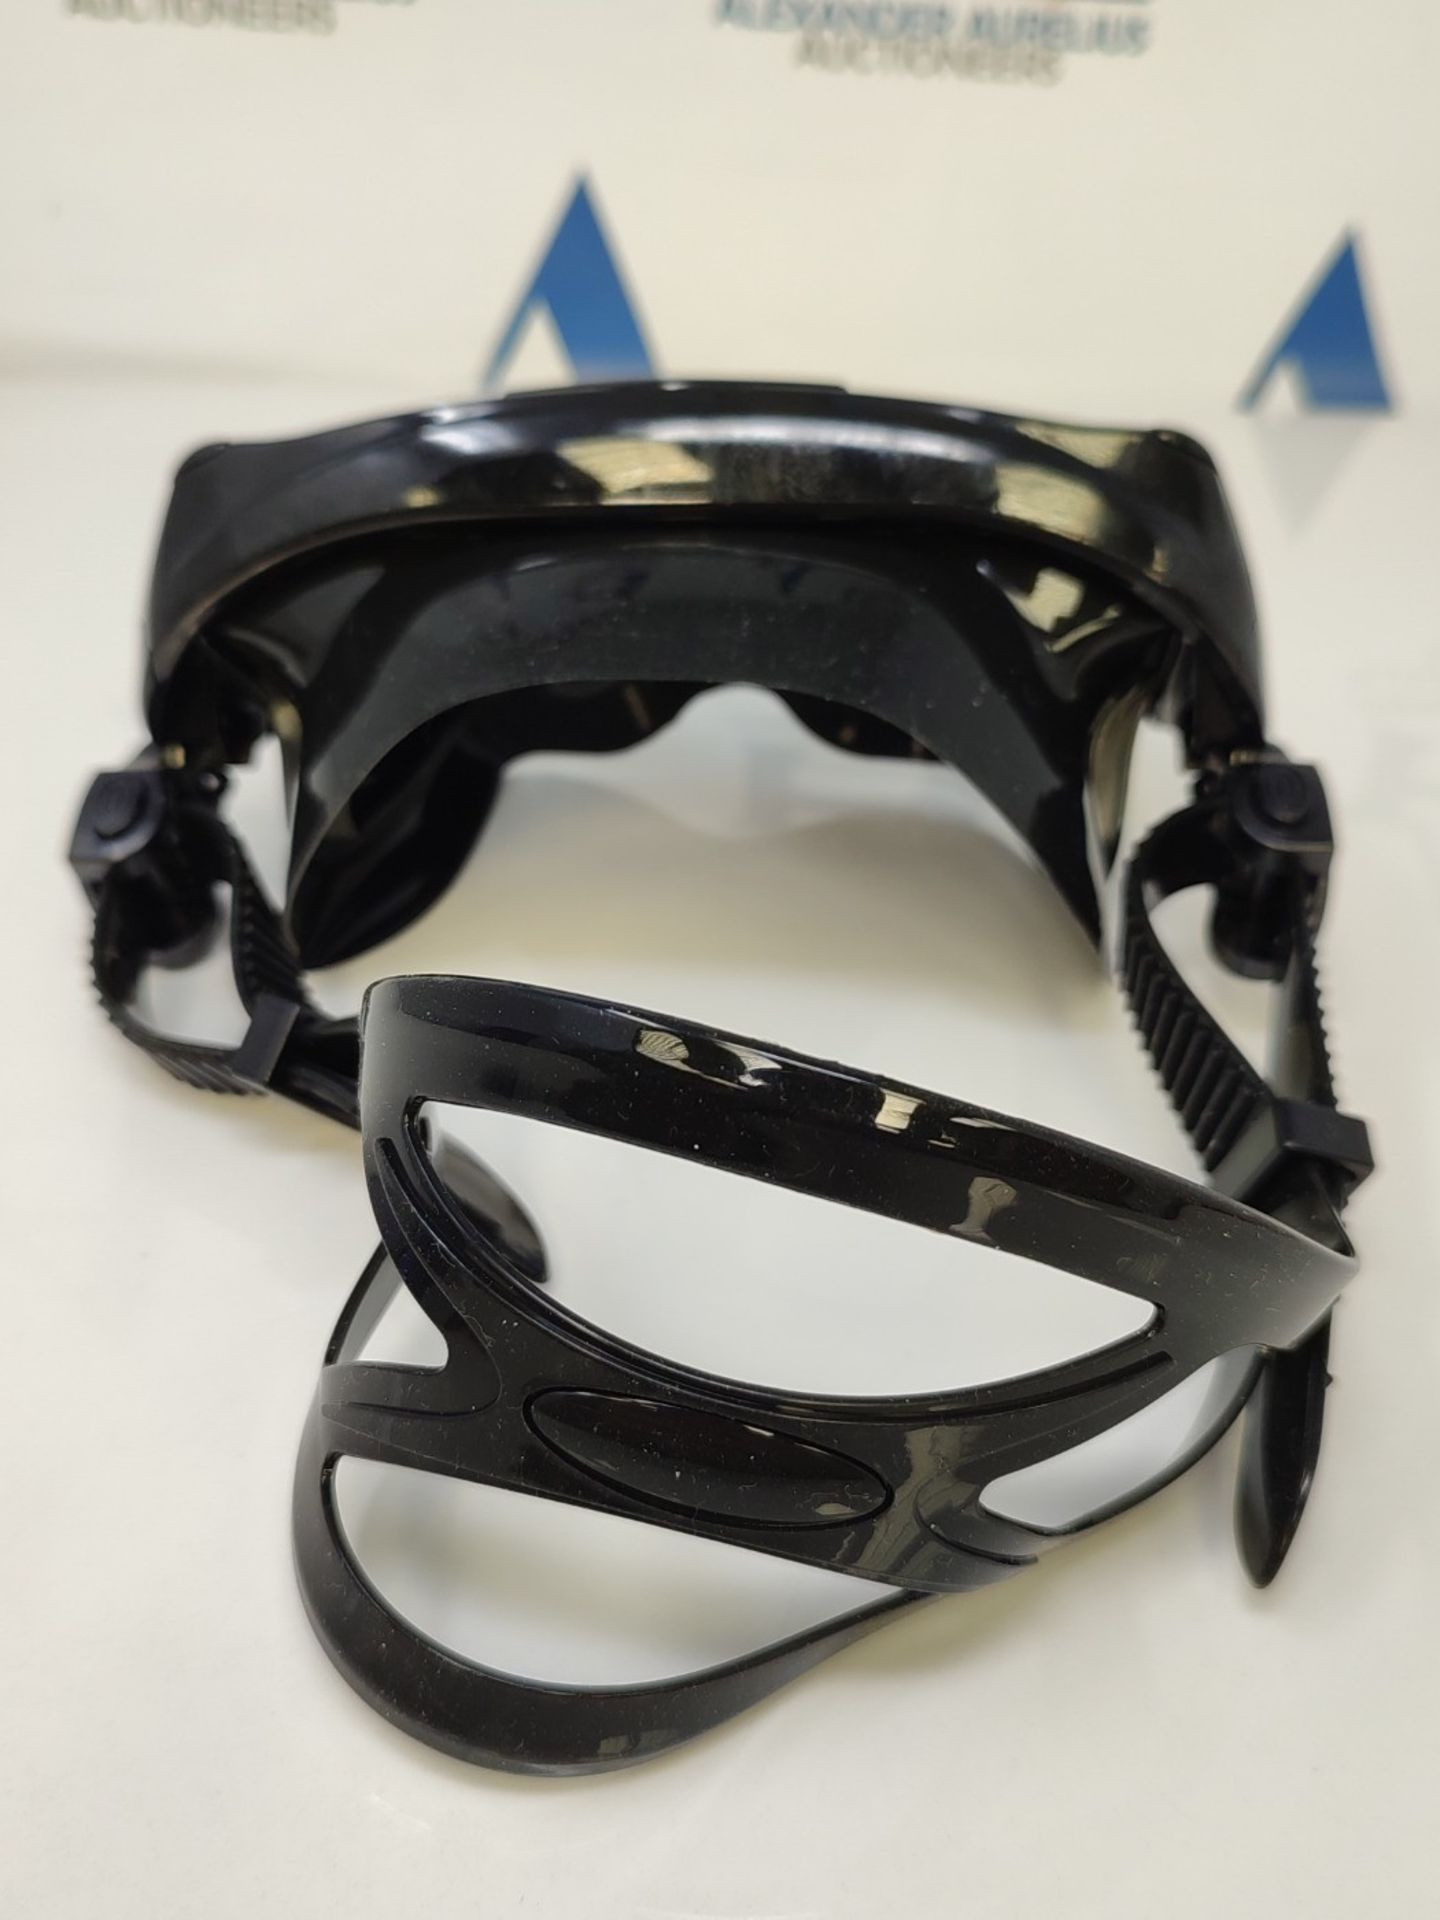 Diving mask with diopter, OWN4B resin lenses snorkel mask diver's mask correction, div - Image 2 of 2